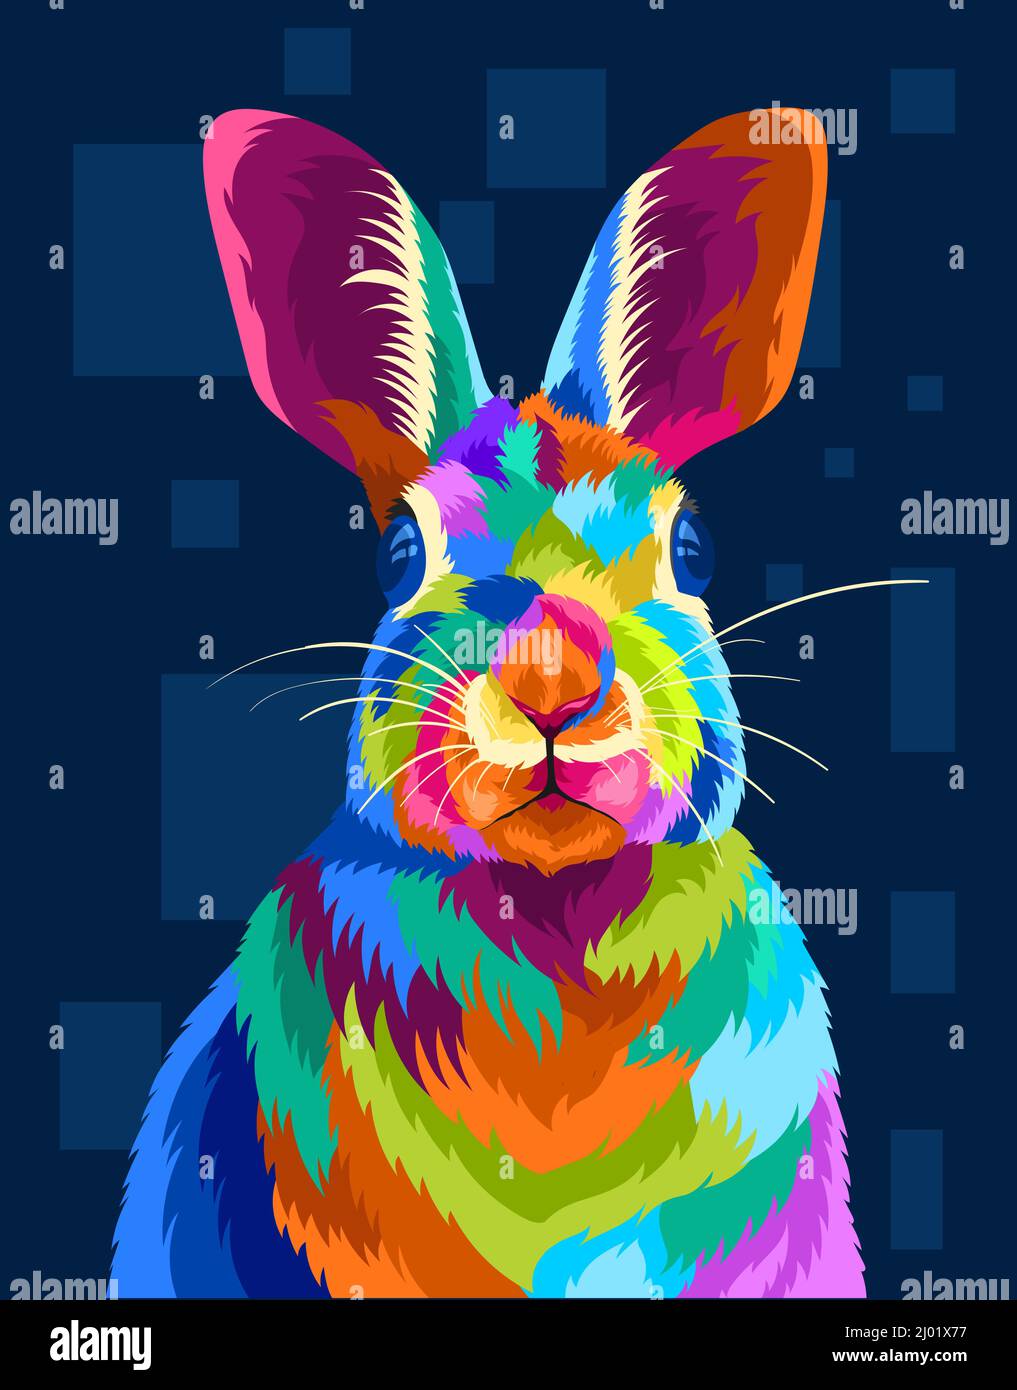 illustration rabbit with pop art style Stock Vector